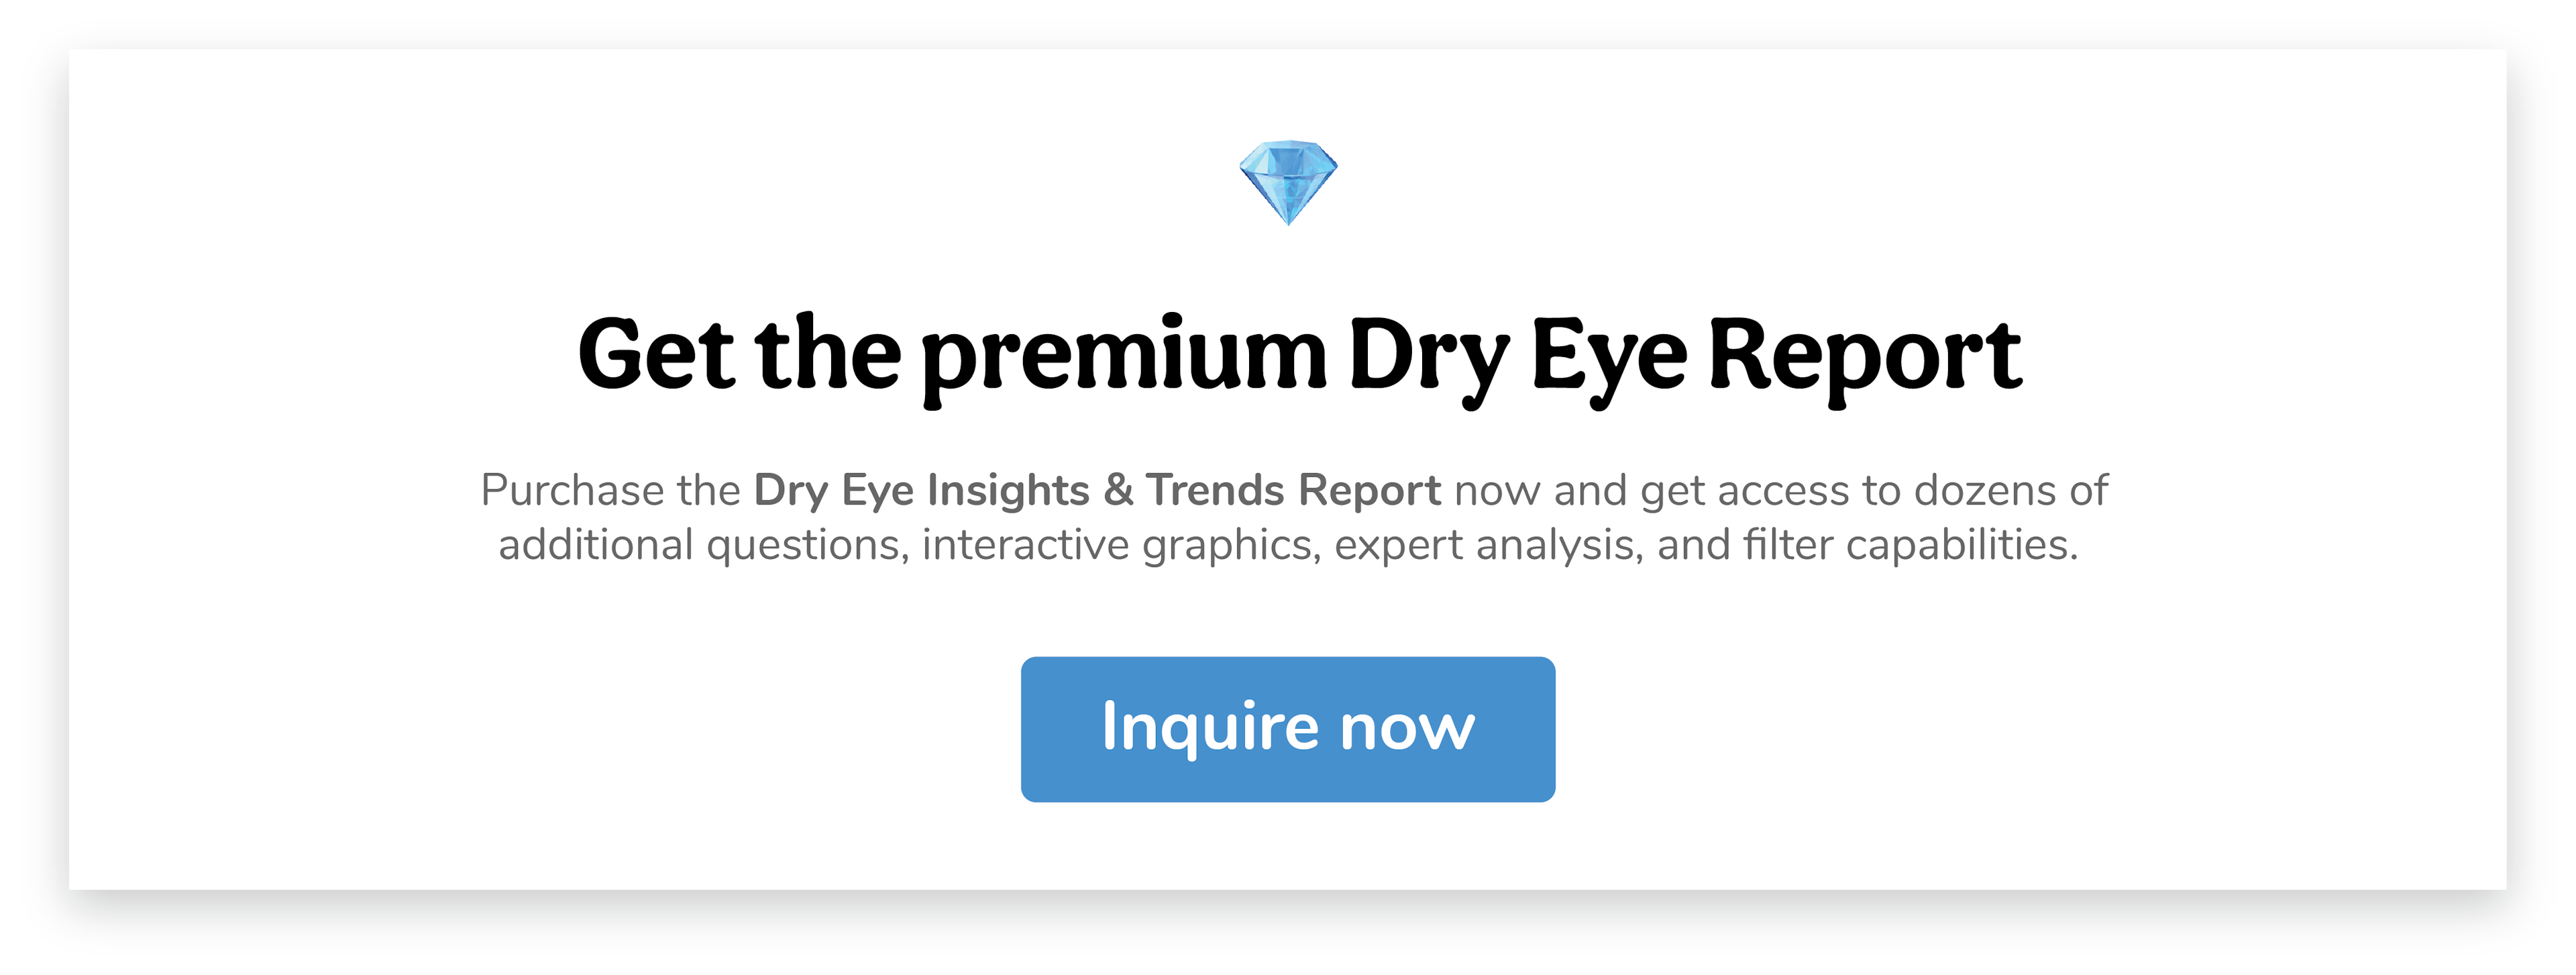 Premium Dry Eye Report